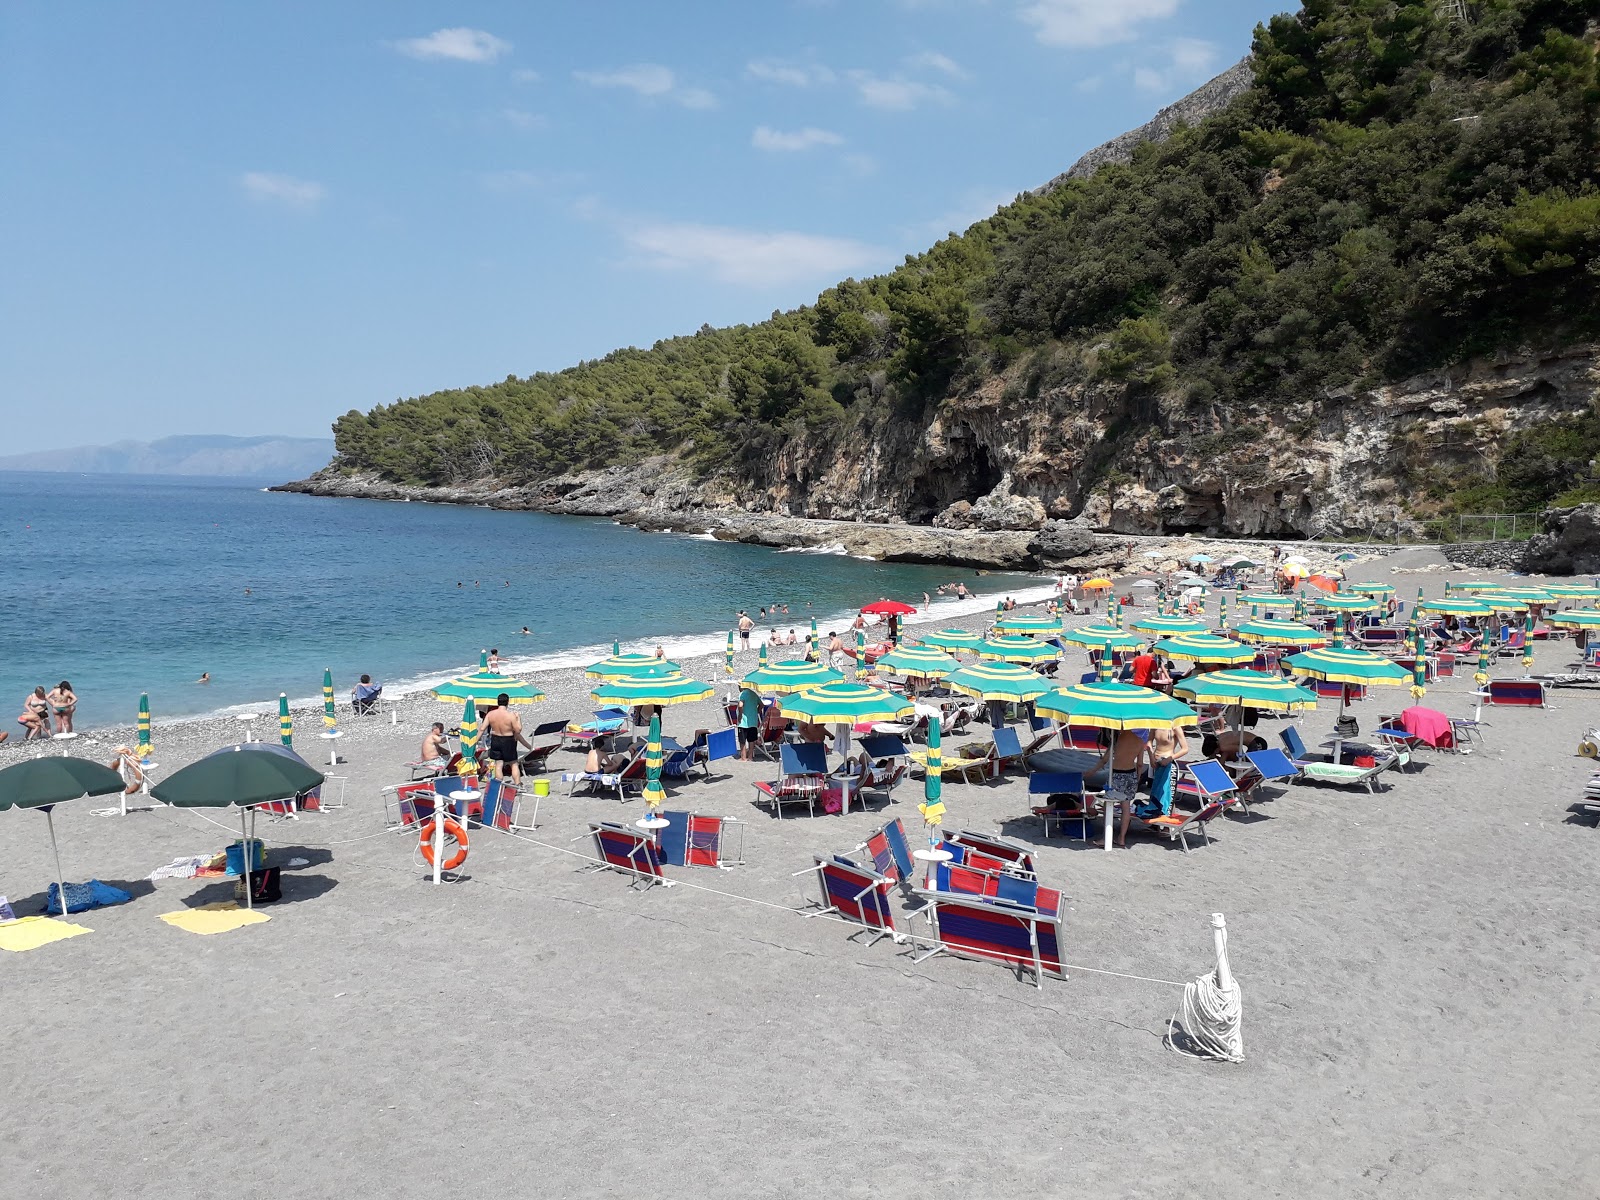 Foto von Spiaggia di Fiumicello befindet sich in natürlicher umgebung